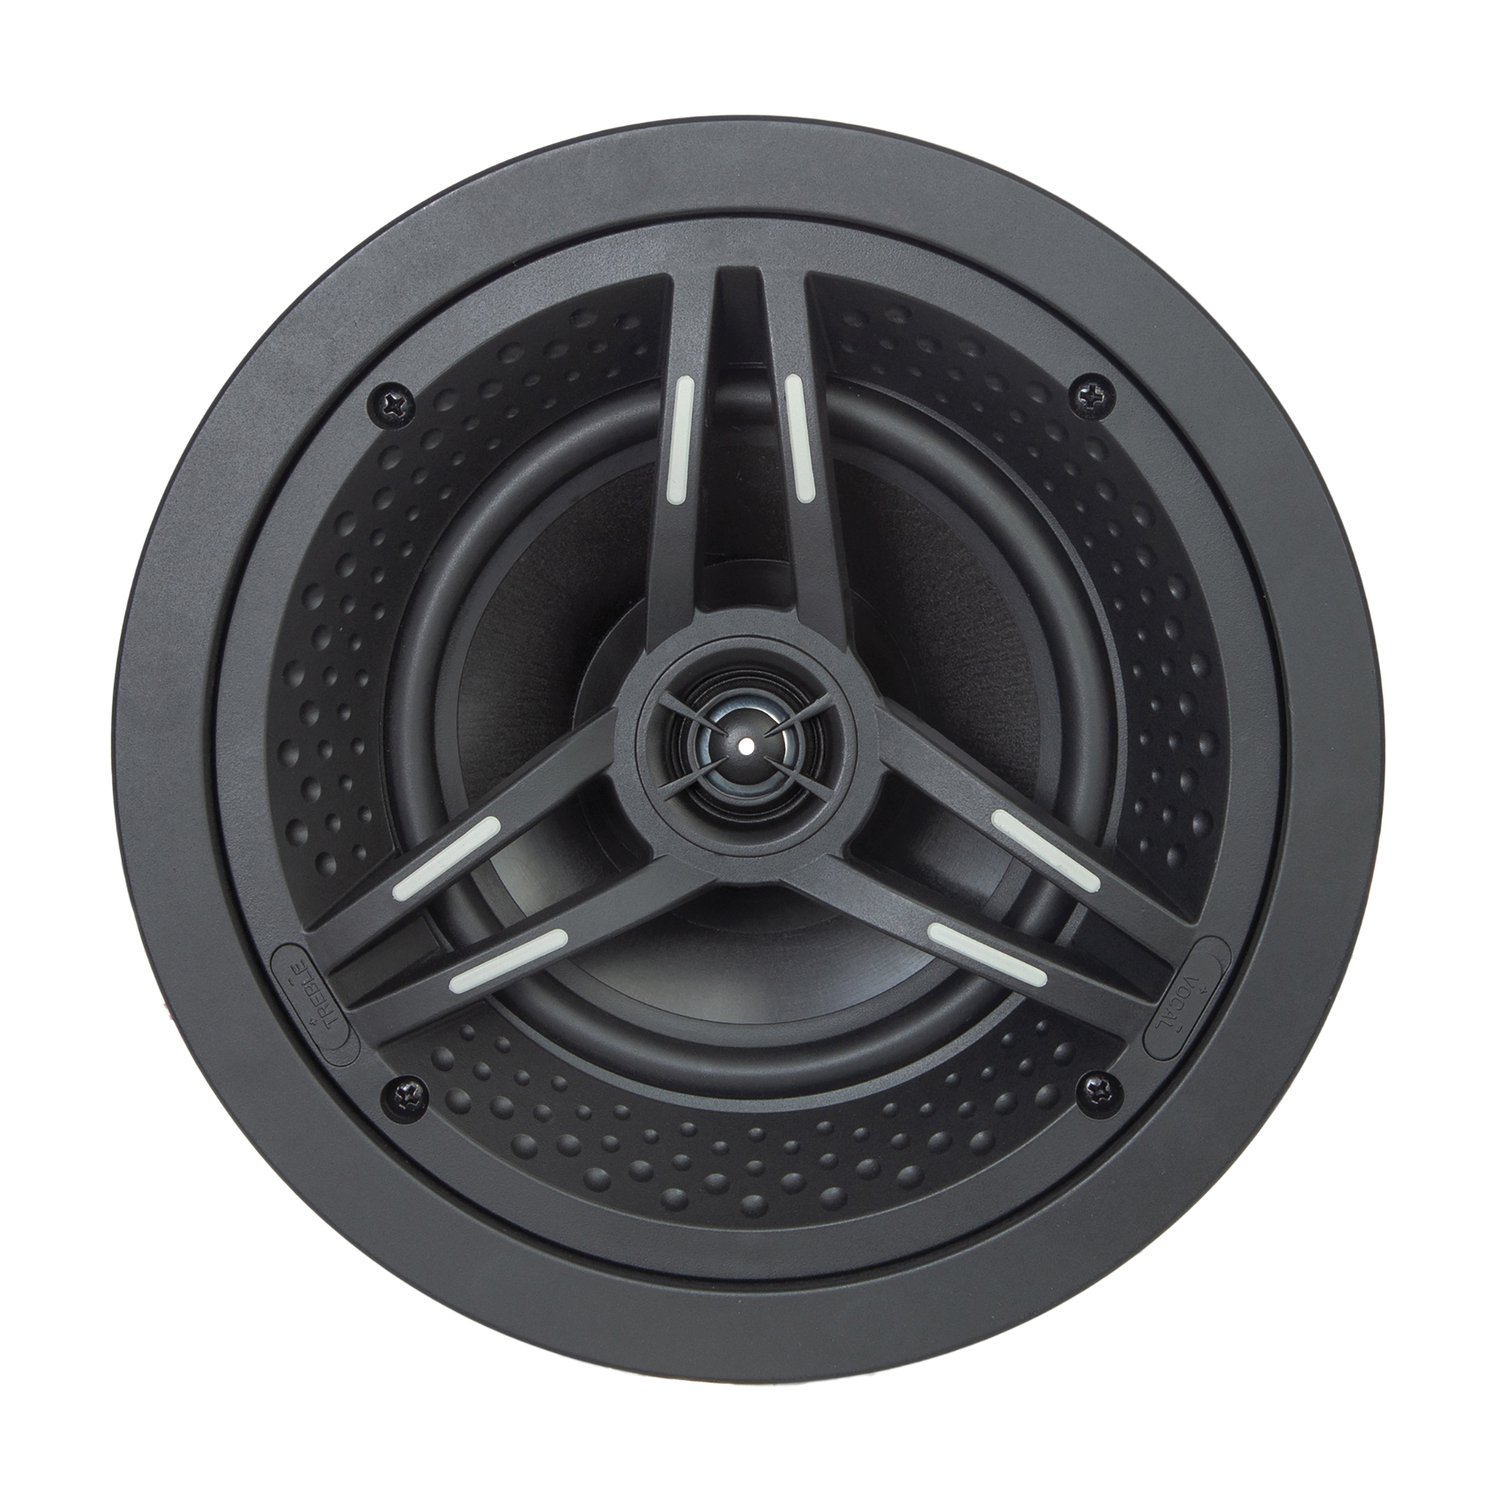 Speakercraft Grand Stage Series 120-Watt-Continuous-Power In-Ceiling Speaker SC-DX-GC6